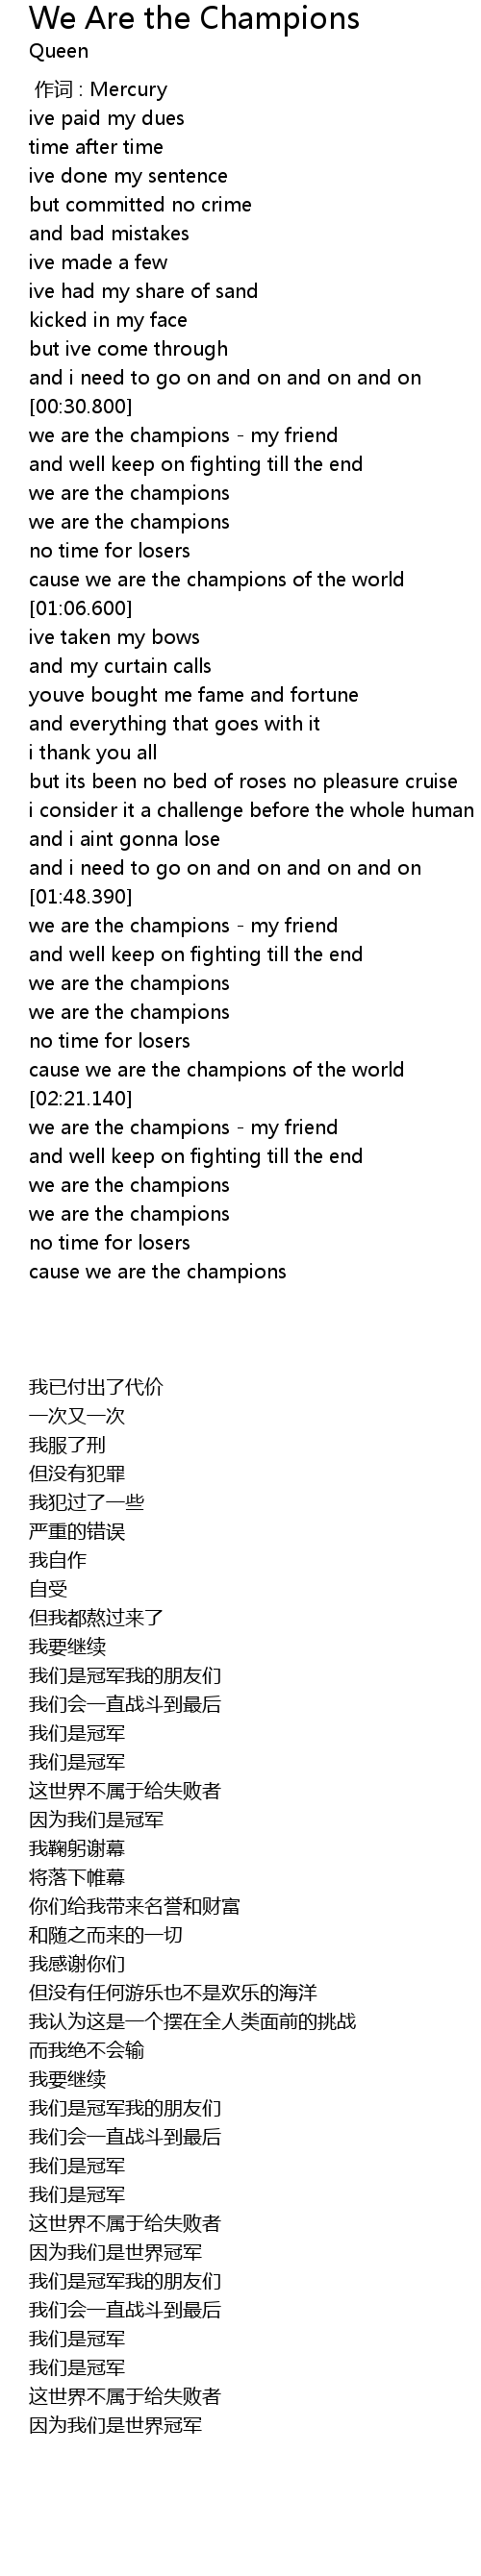 We Are the Champions Lyrics Follow Lyrics